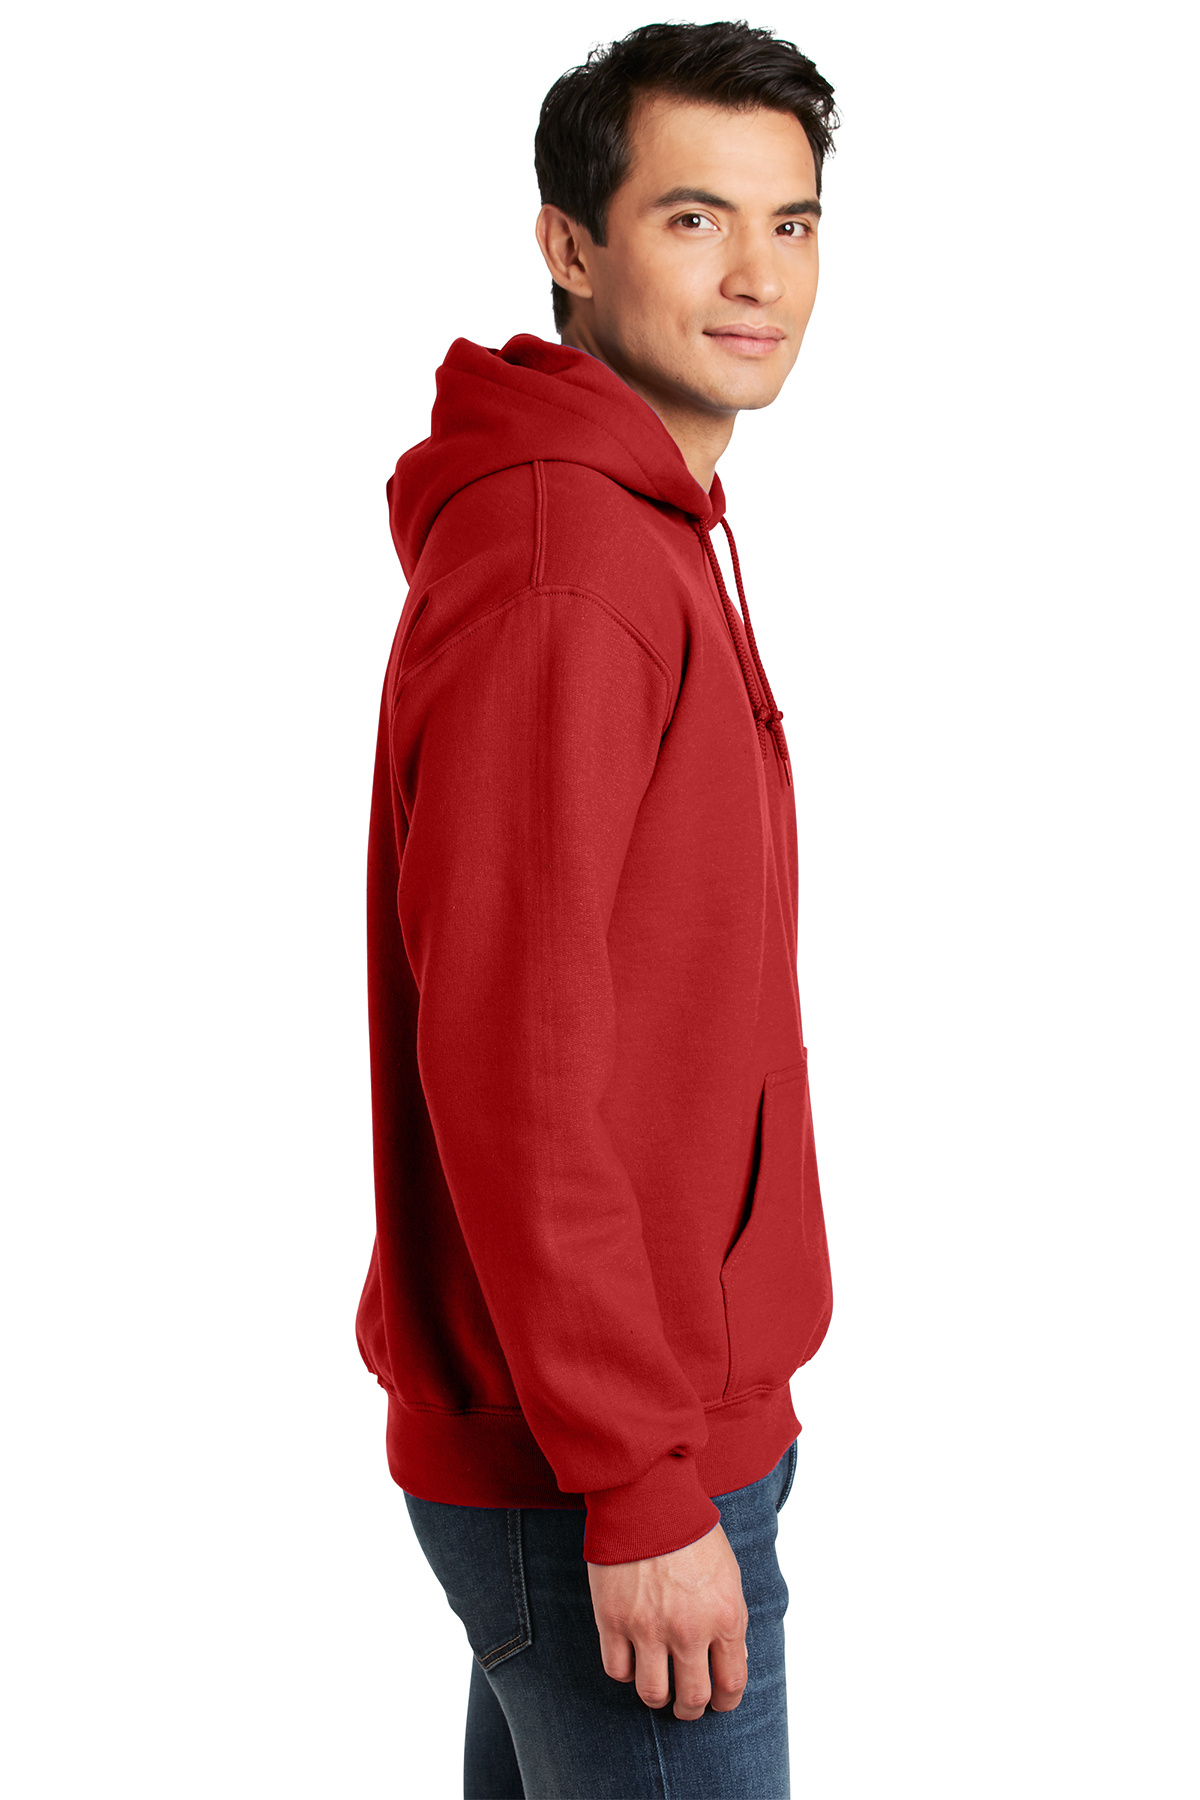 Gildan - DryBlend Pullover Hooded Sweatshirt | Product | SanMar